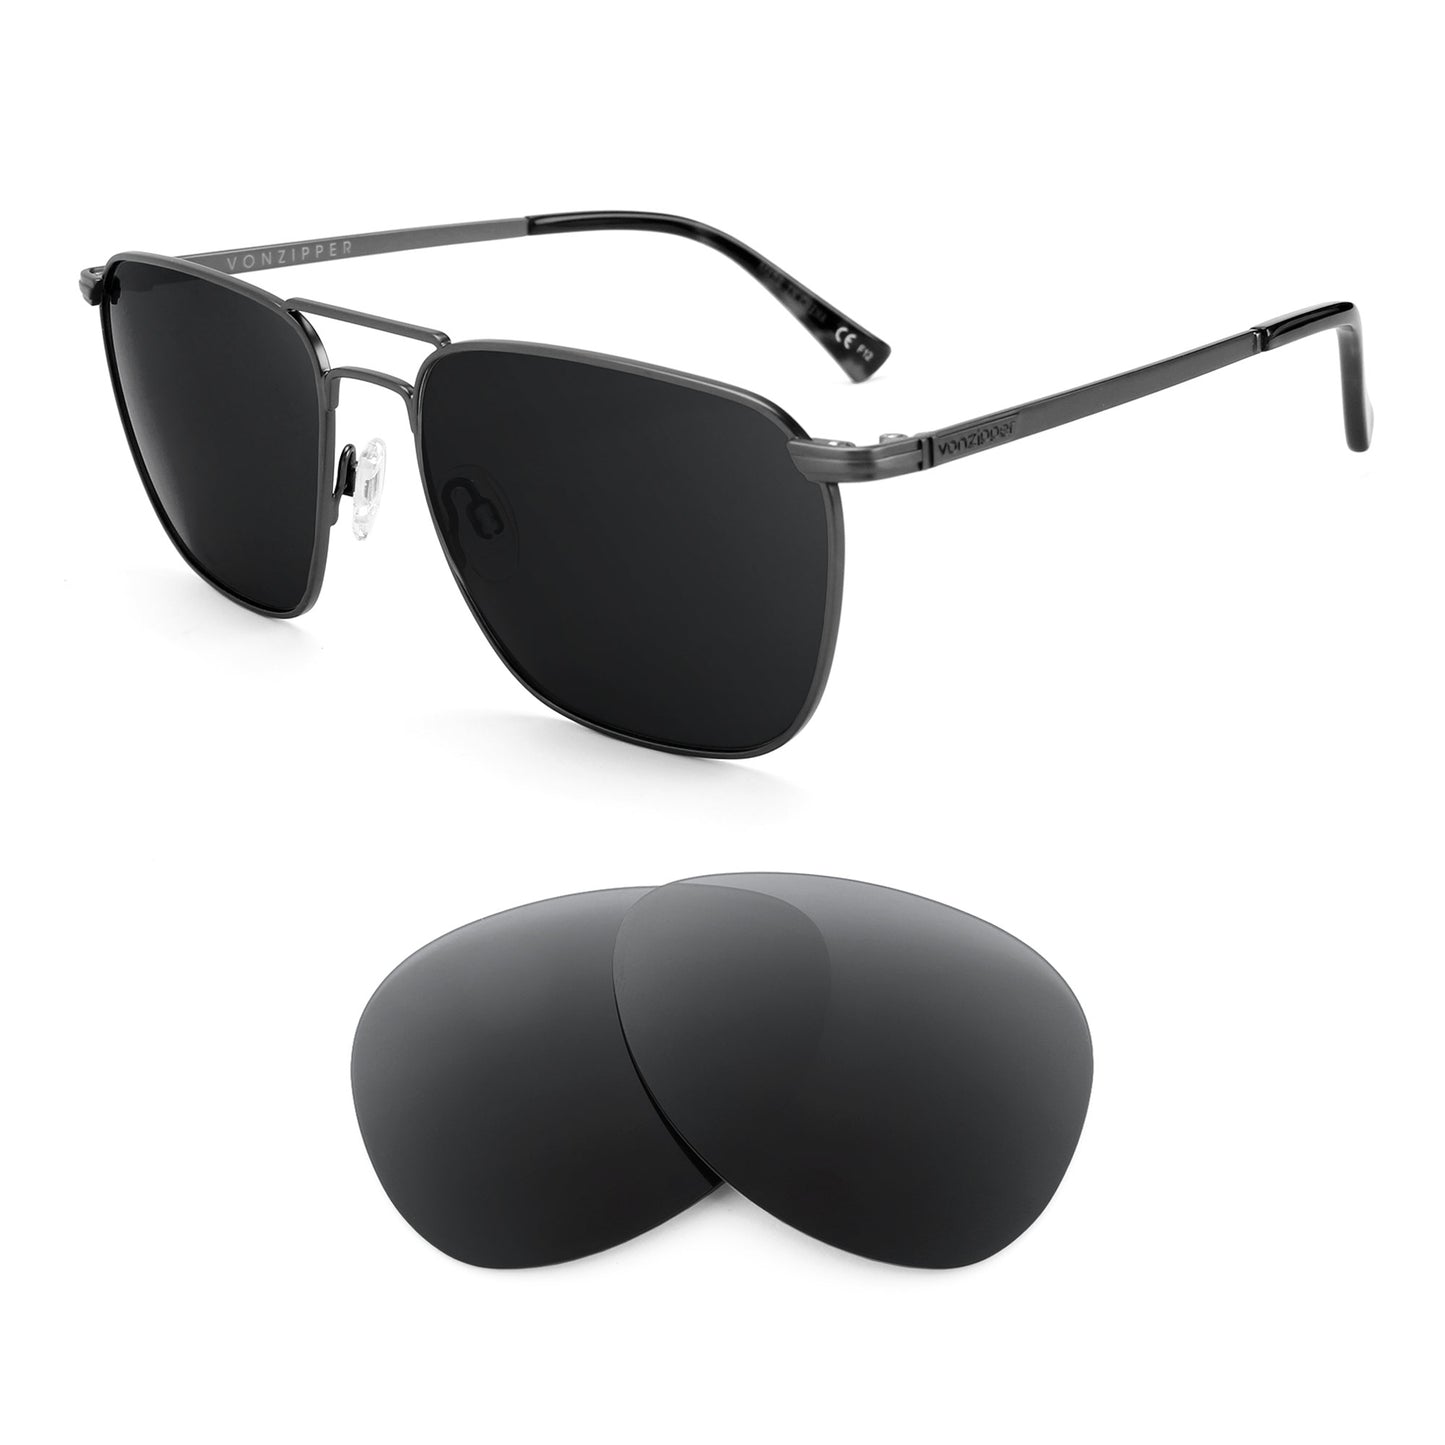 VonZipper League sunglasses with replacement lenses